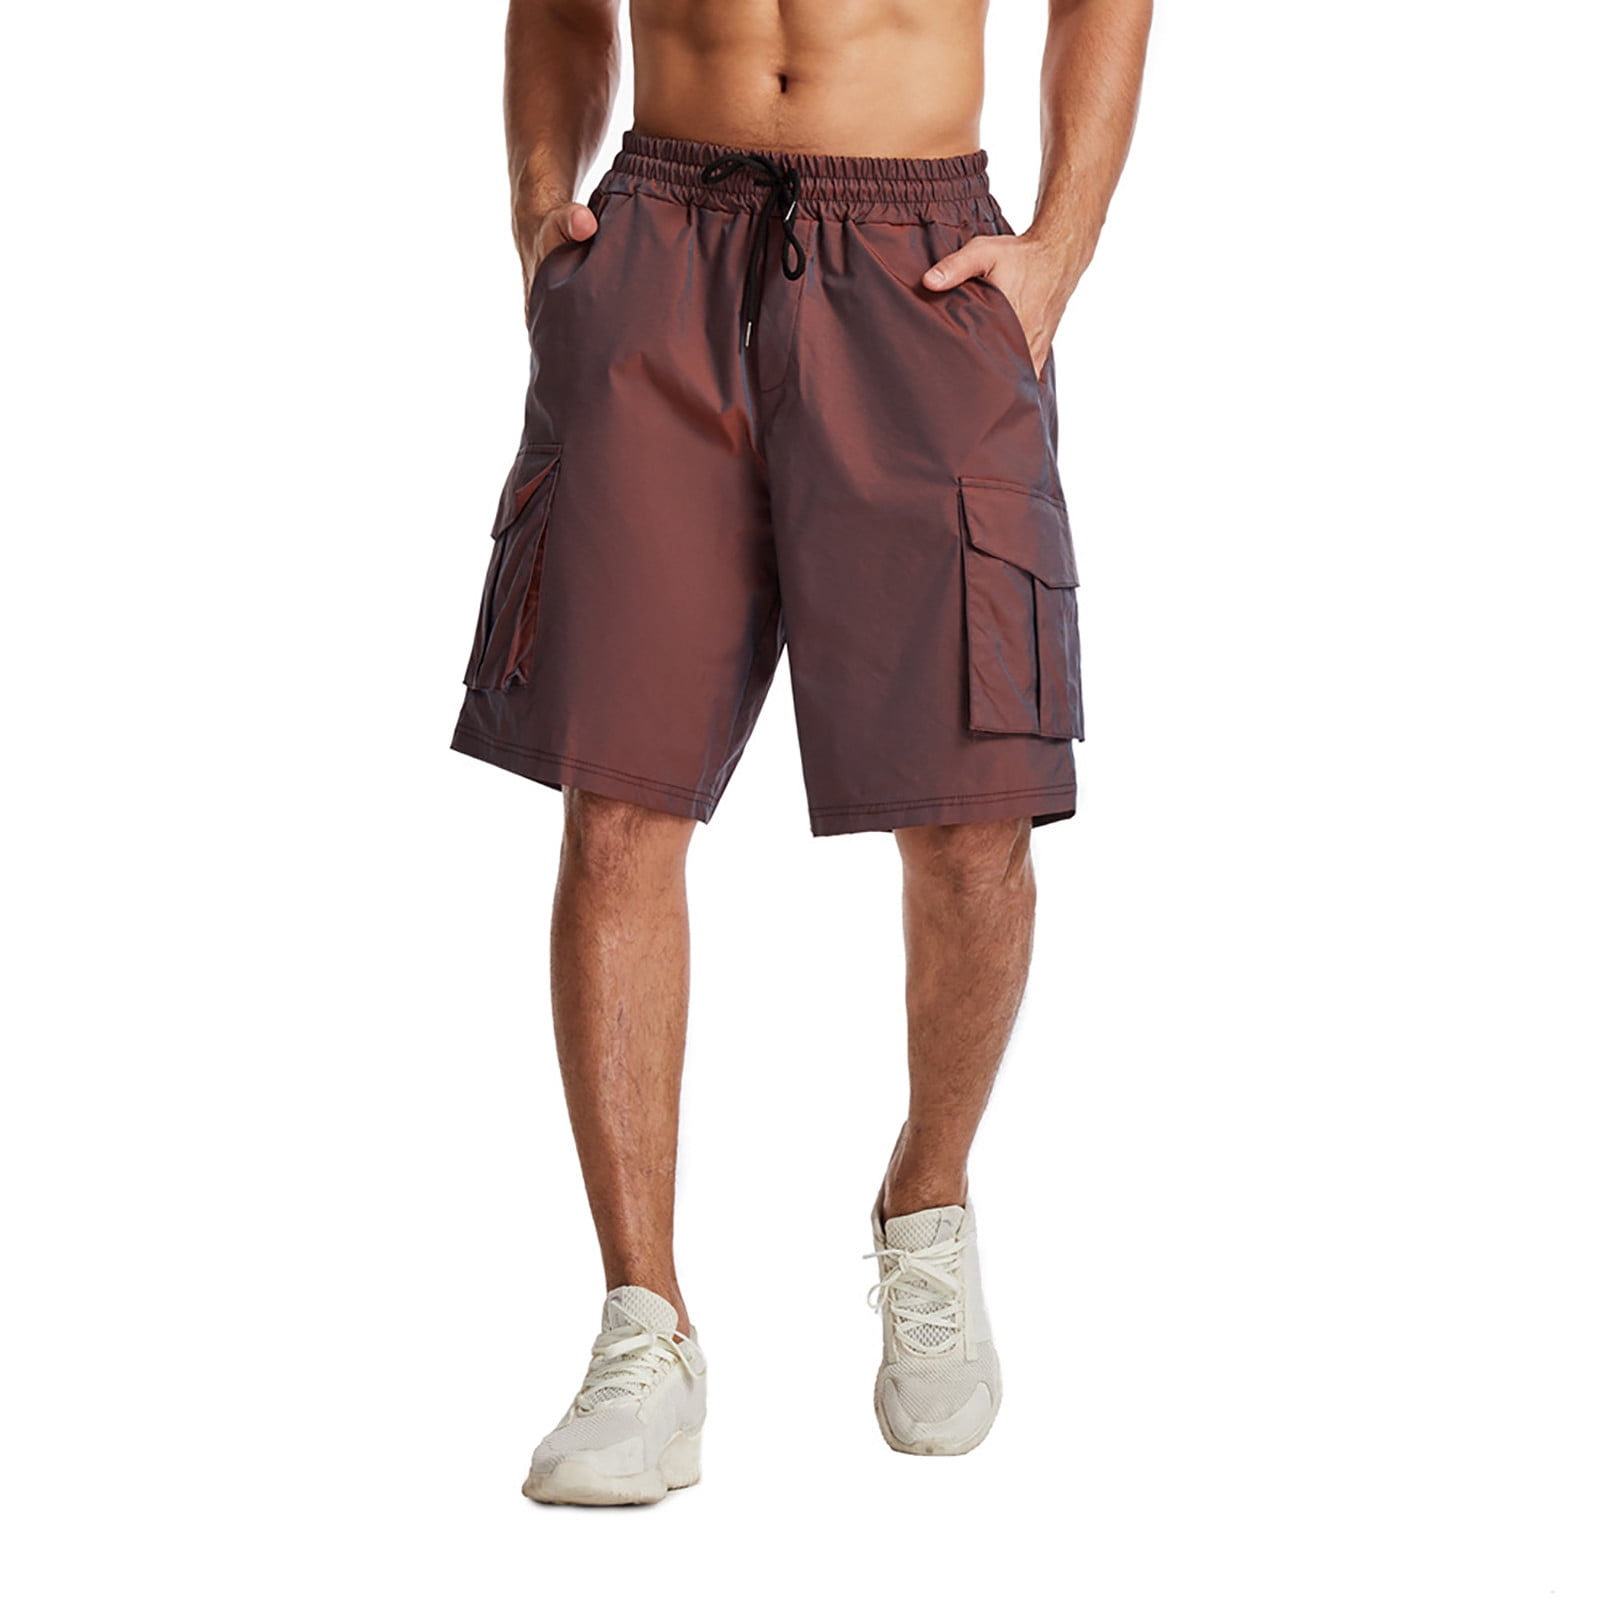 jsaierl Cargo Shorts for Men Plus Size Multi Pockets Shorts Work ...